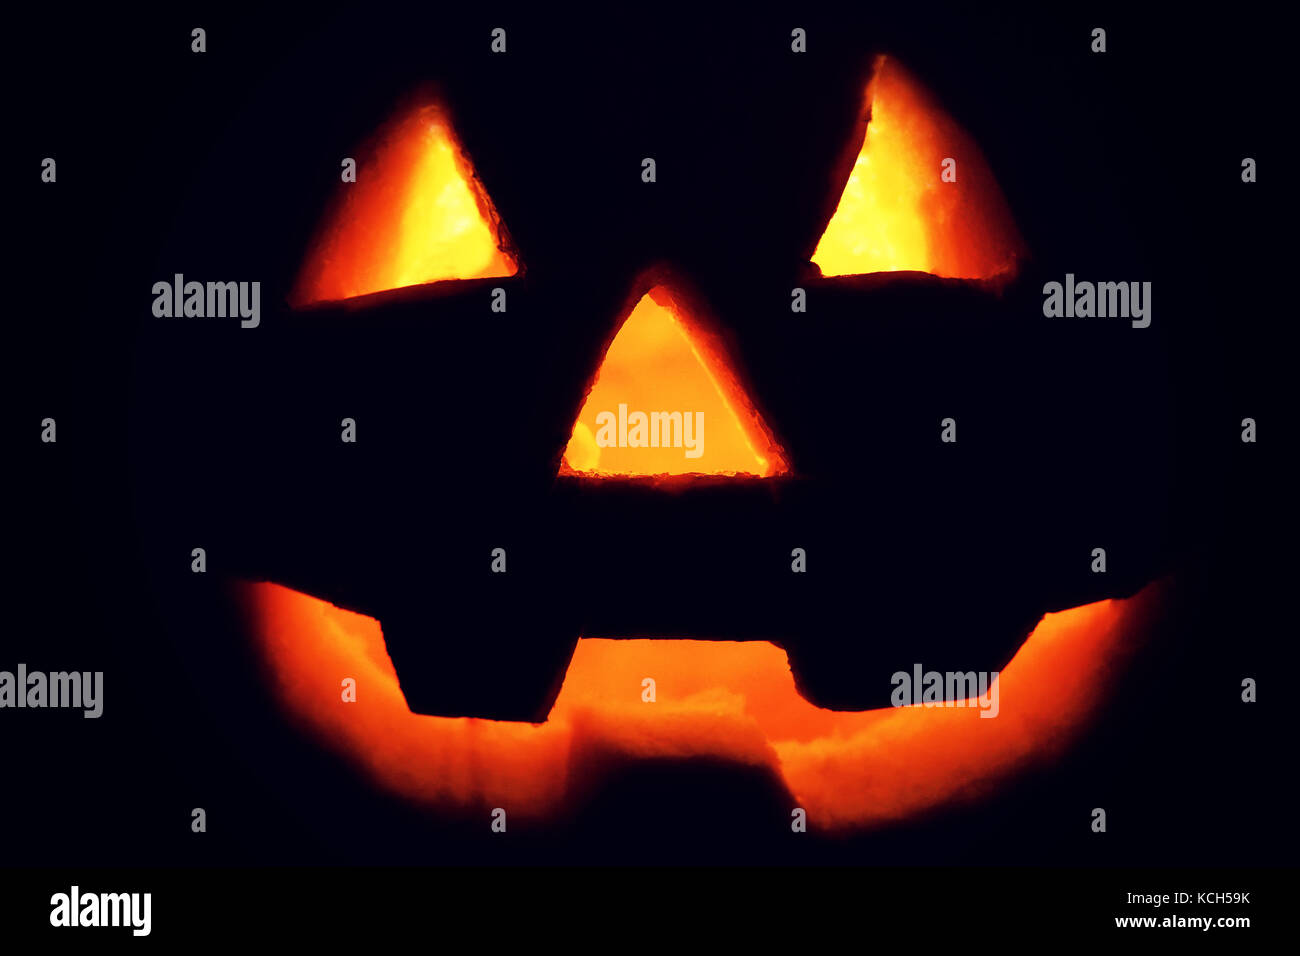 Jack-o'-lantern silhouette on black background. Glowing Jack-o'-lantern pumpkin in dark. Halloween background. Stock Photo